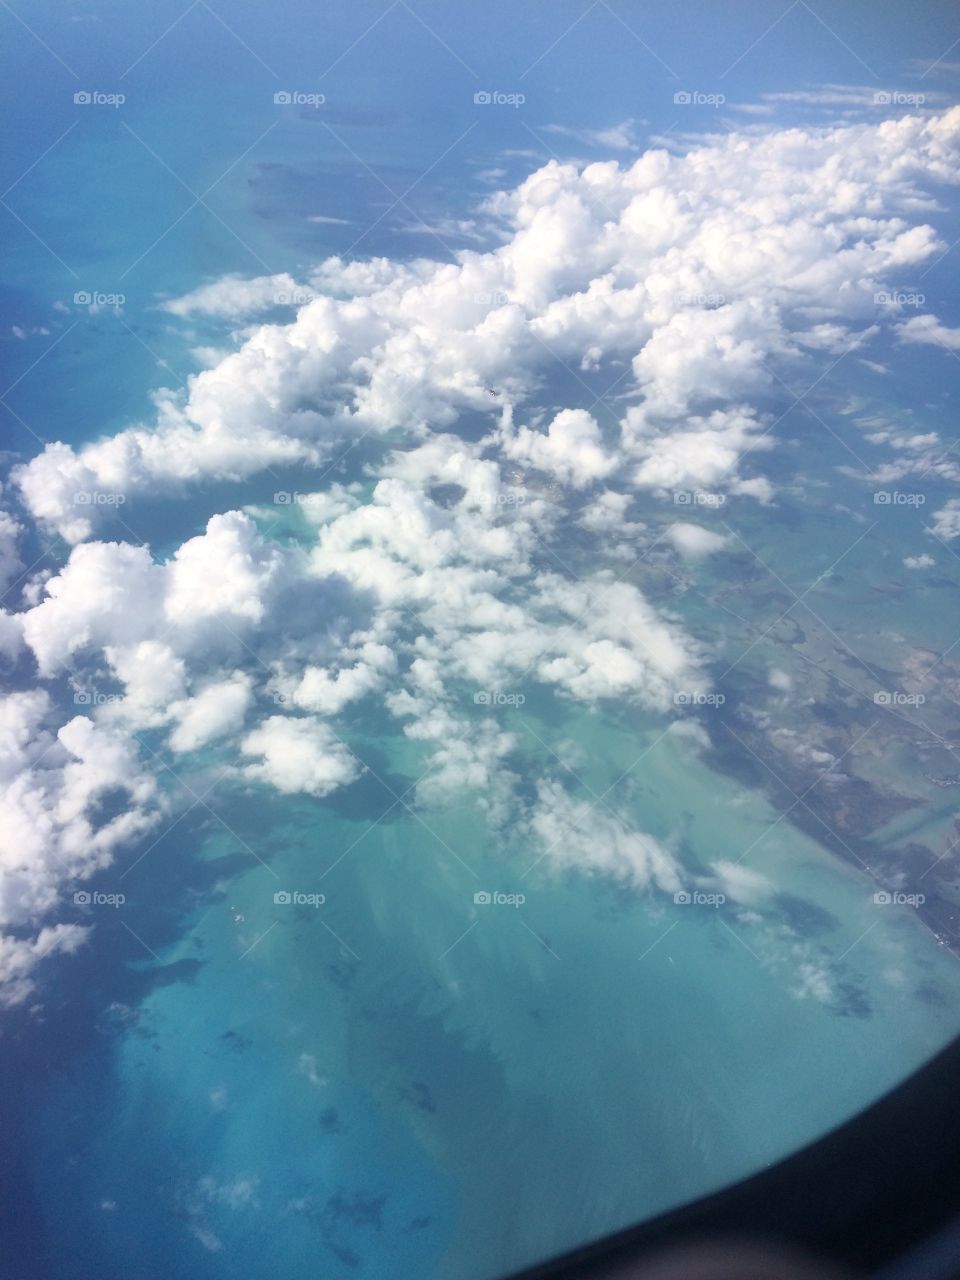 Cuba from the sky 